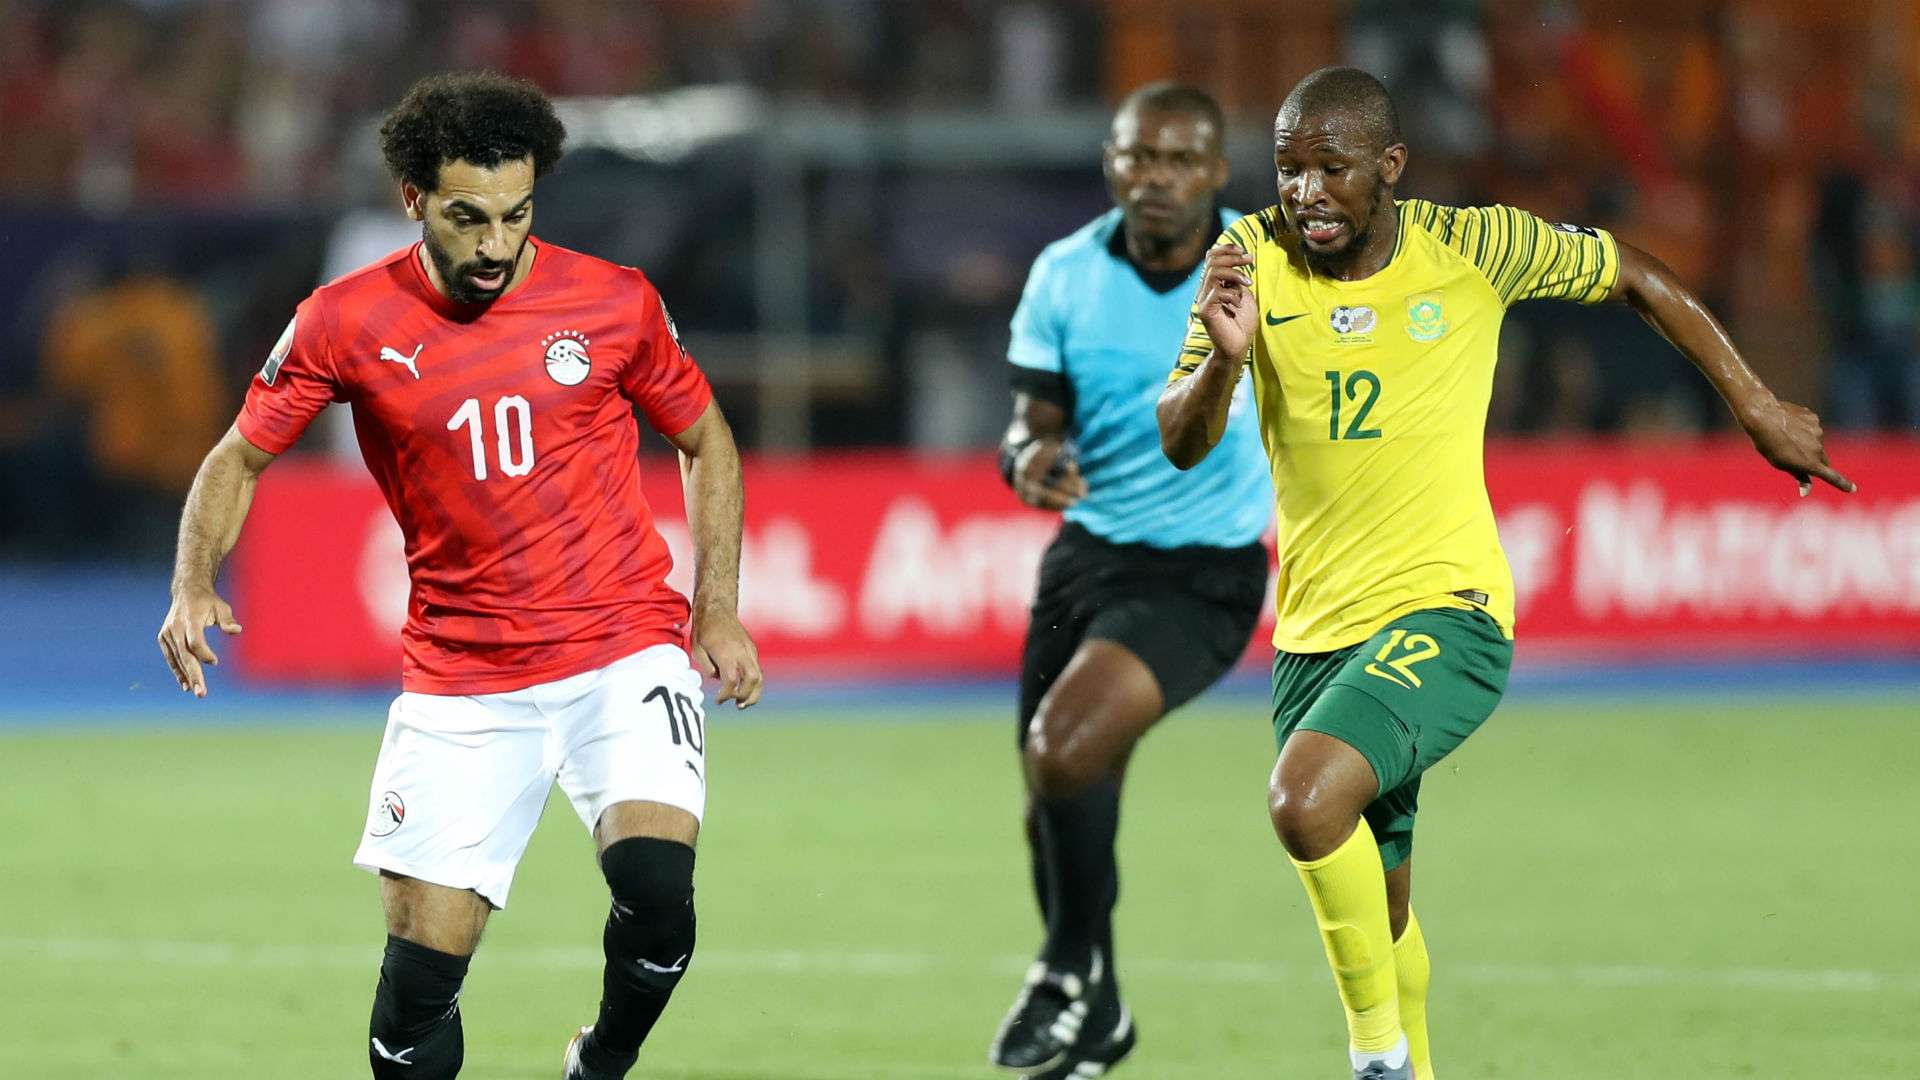 Mohamed Salah of Egypt challenged by Kamohelo Mokotjo of South Africa, July 2019